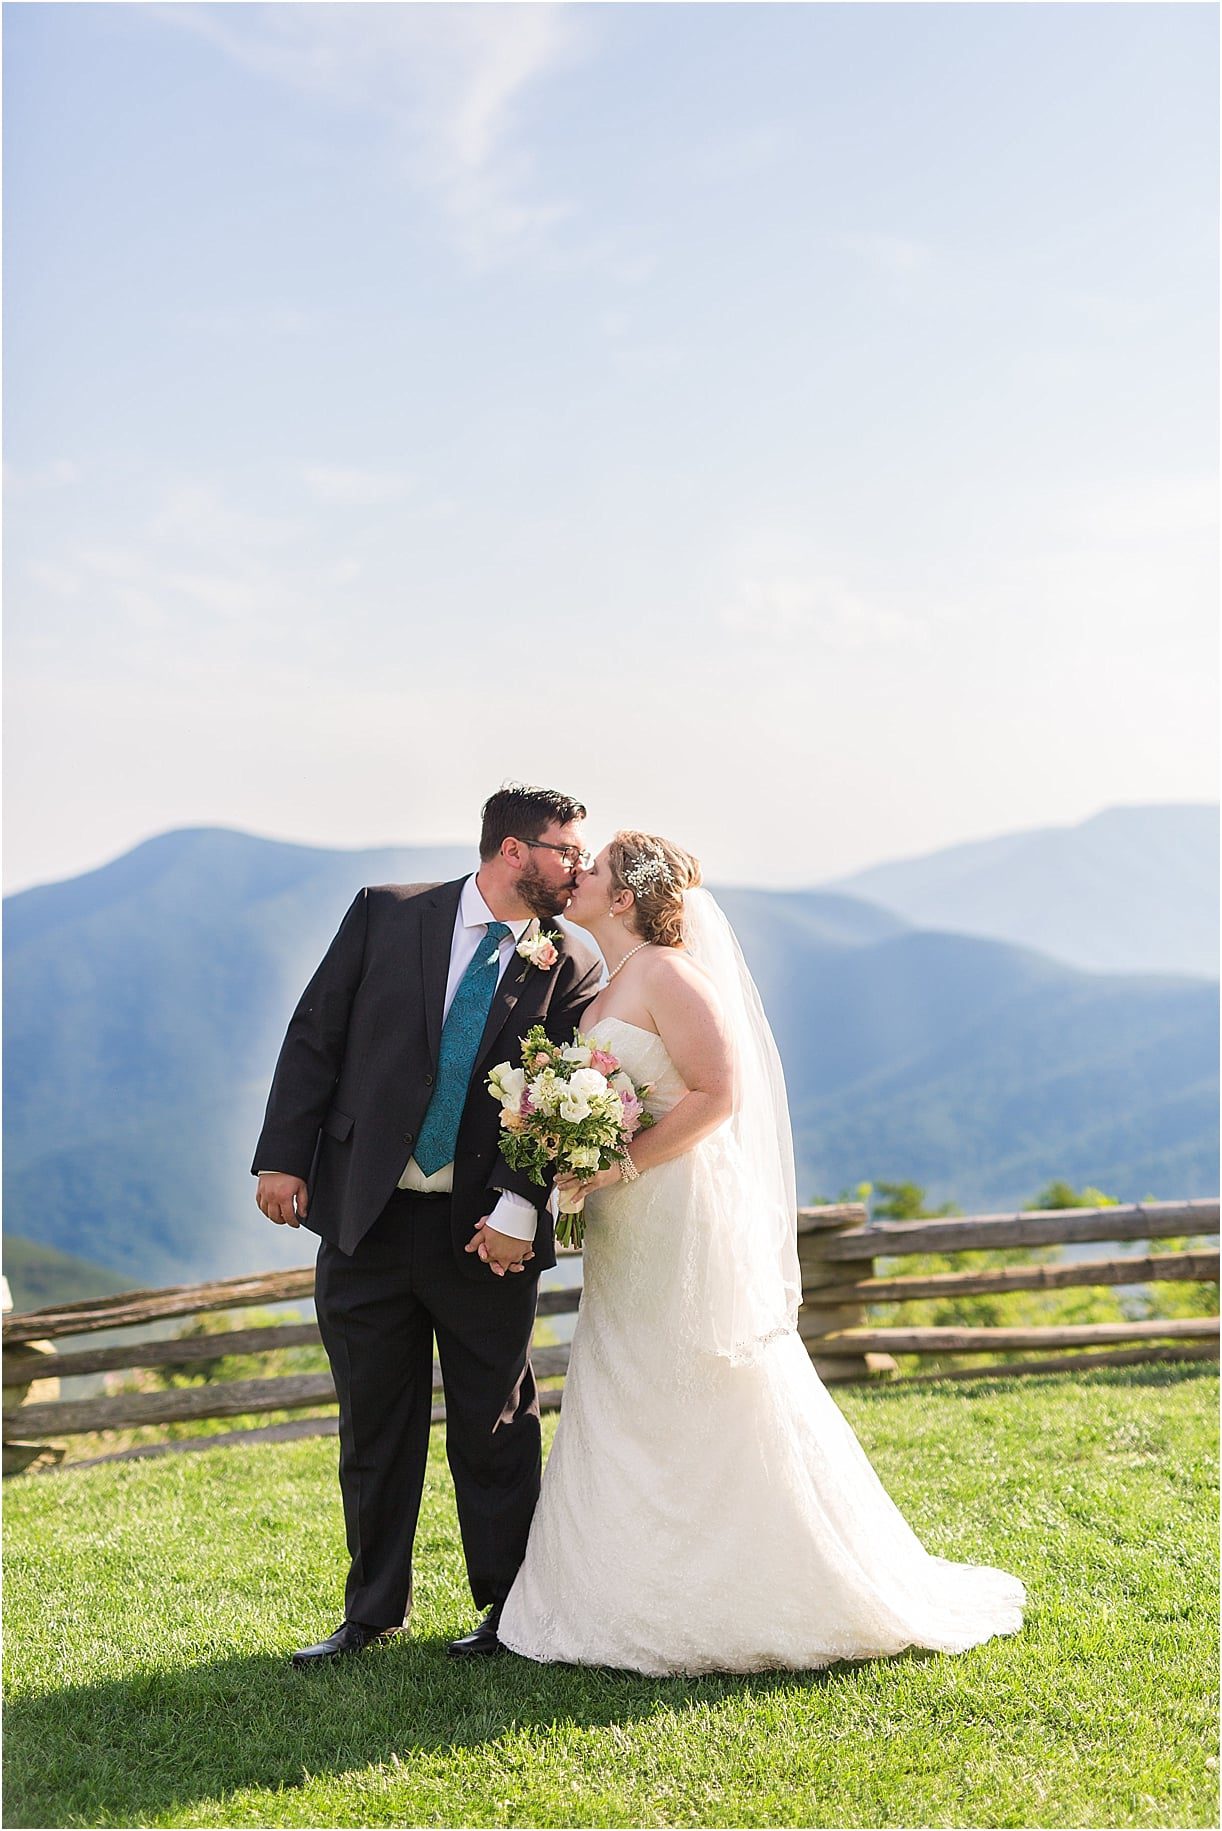 Virginia Ski Resort Wedding at Wintergreen as seen on Hill City Bride Wedding Blog by Ashley Eiban - kiss, married